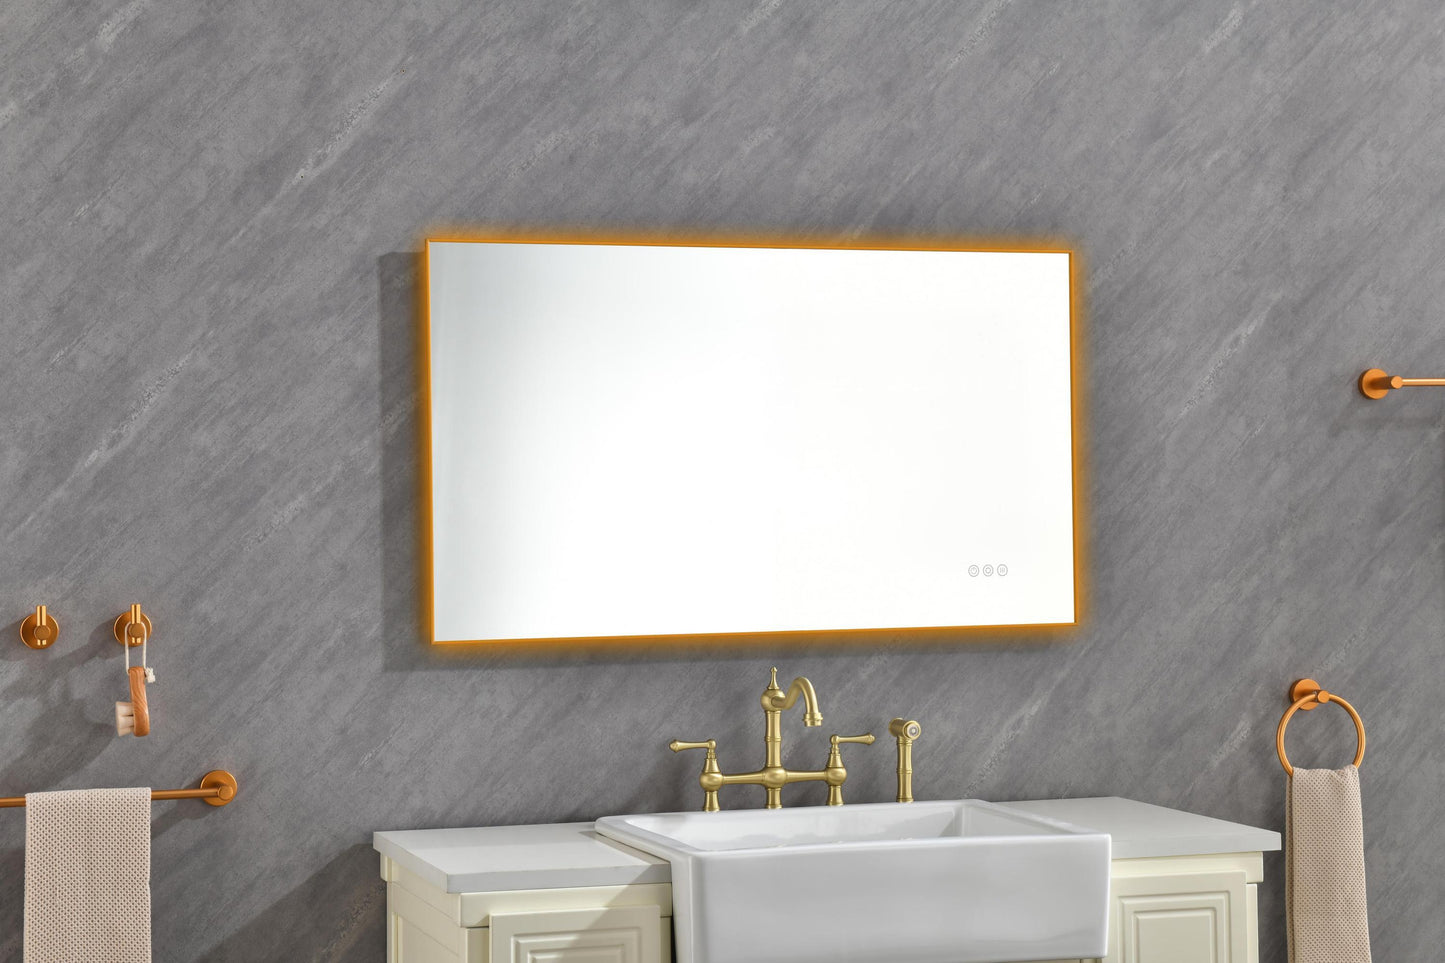 42x 24Inch LED Mirror Bathroom Vanity Mirror with Back Light, Wall Mount Anti-Fog Memory Large Adjustable Vanity Mirror